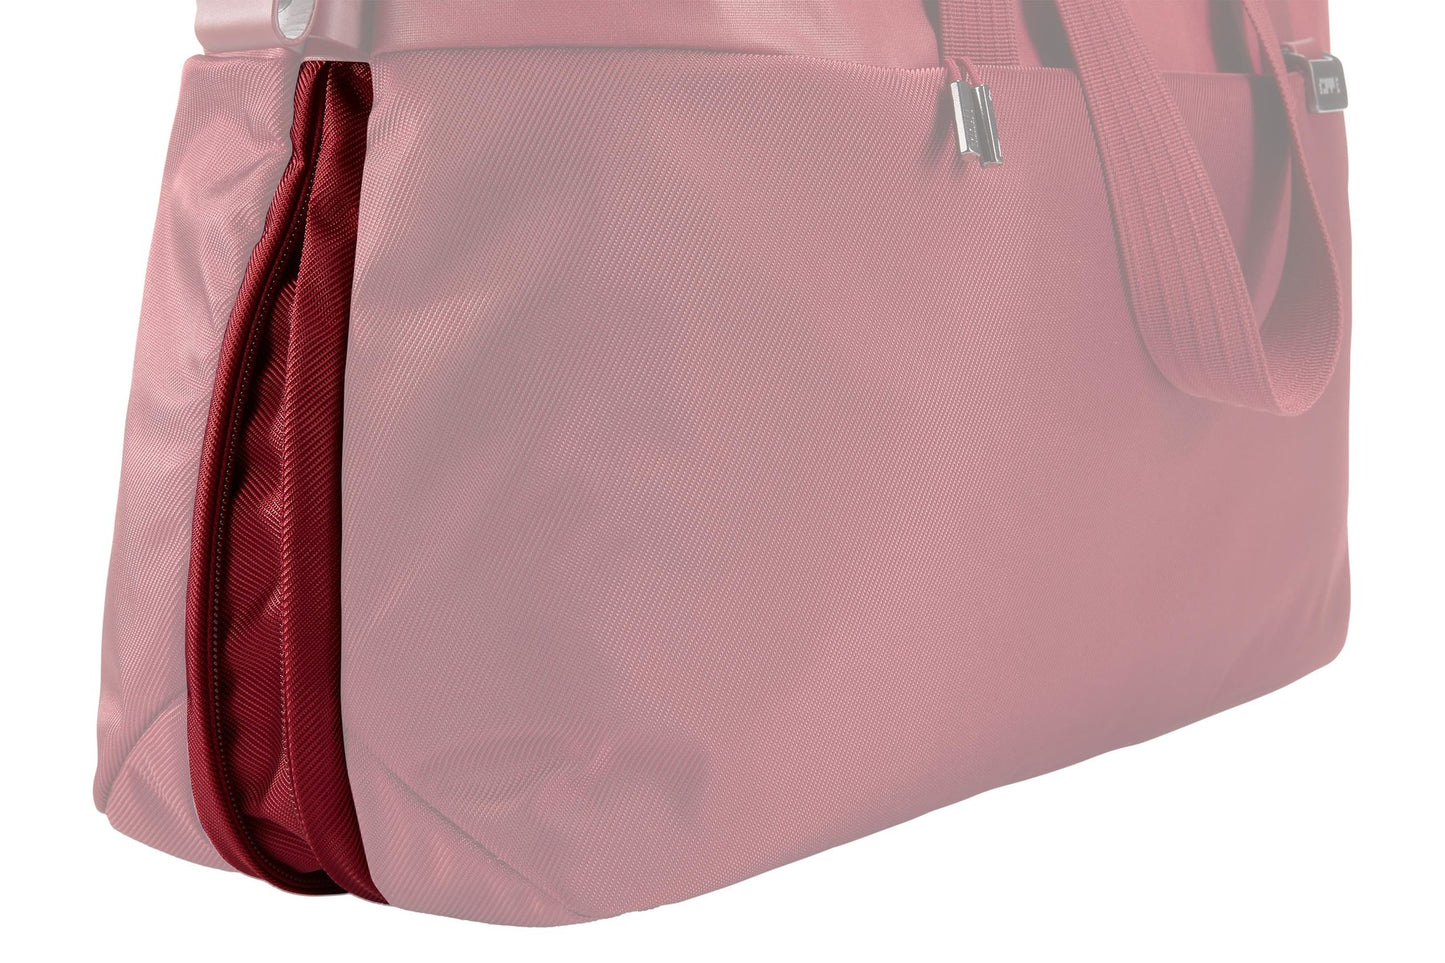 Горизонтальная большая сумка Thule Spira SPAT-116 цвета Rio Red